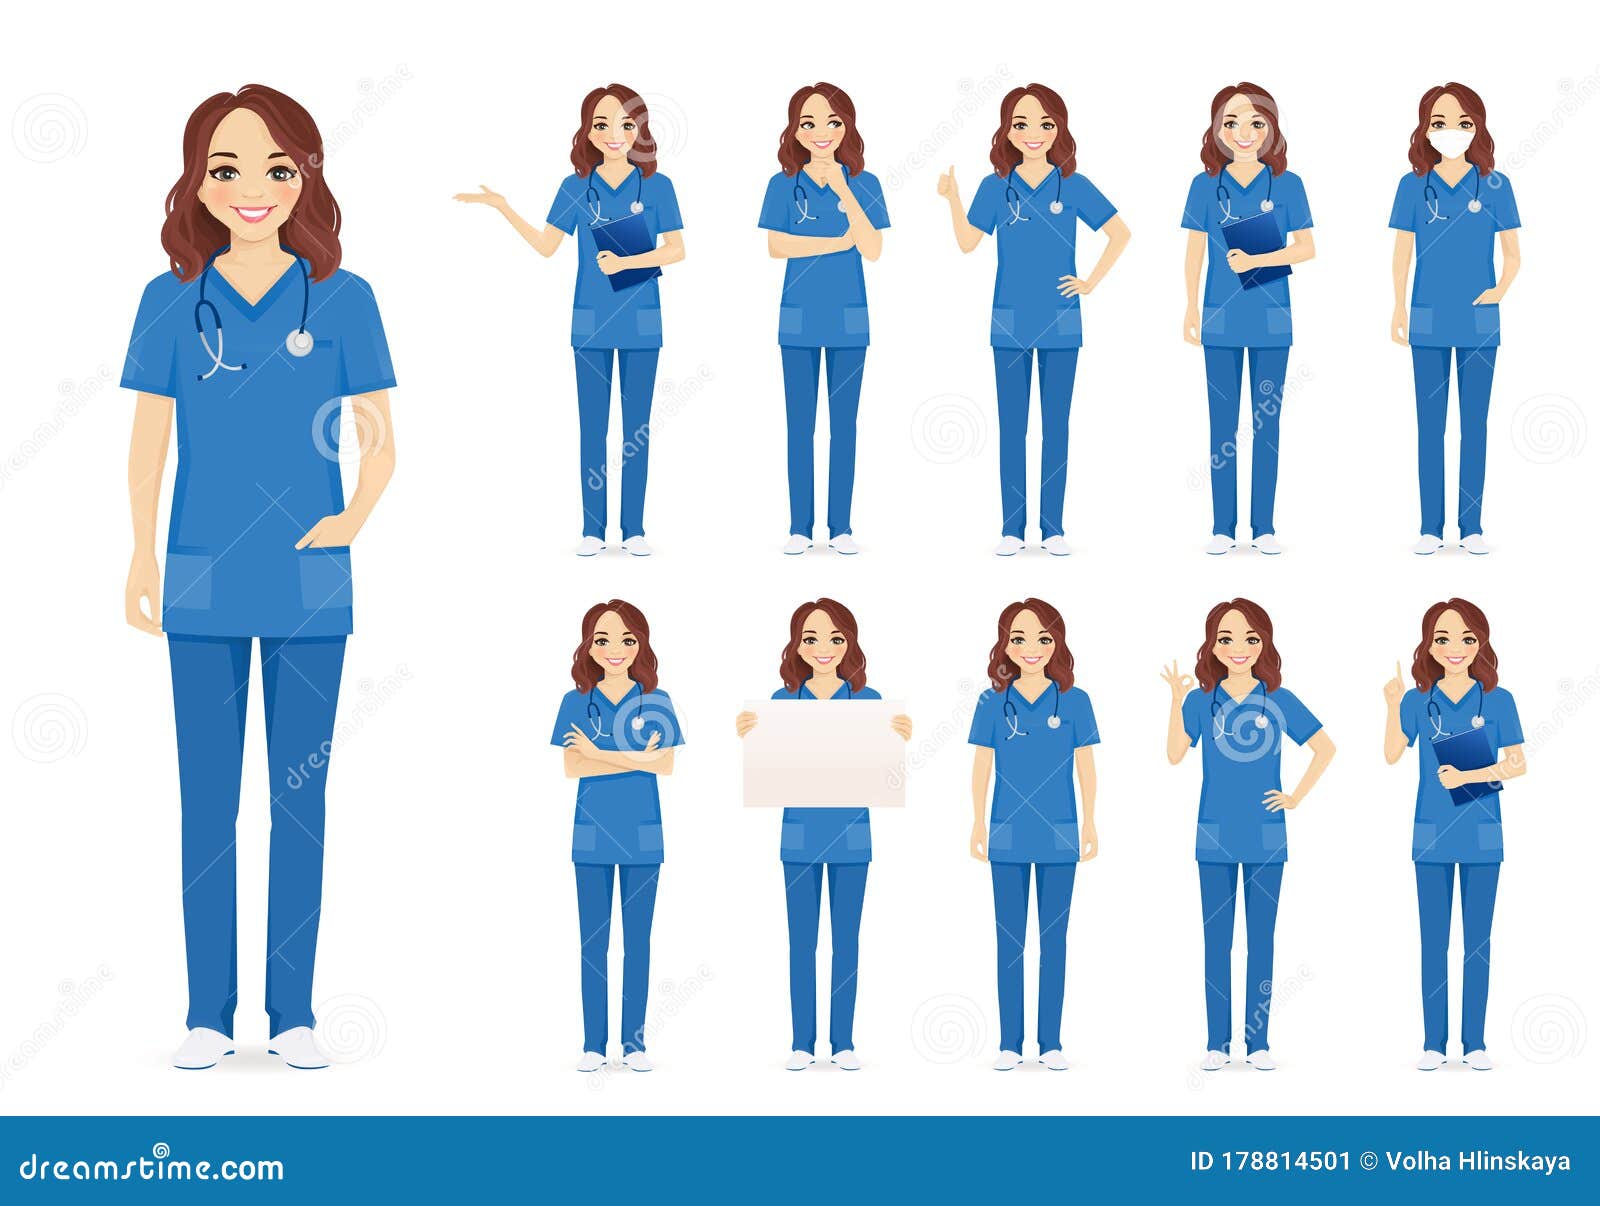 female nurse character set